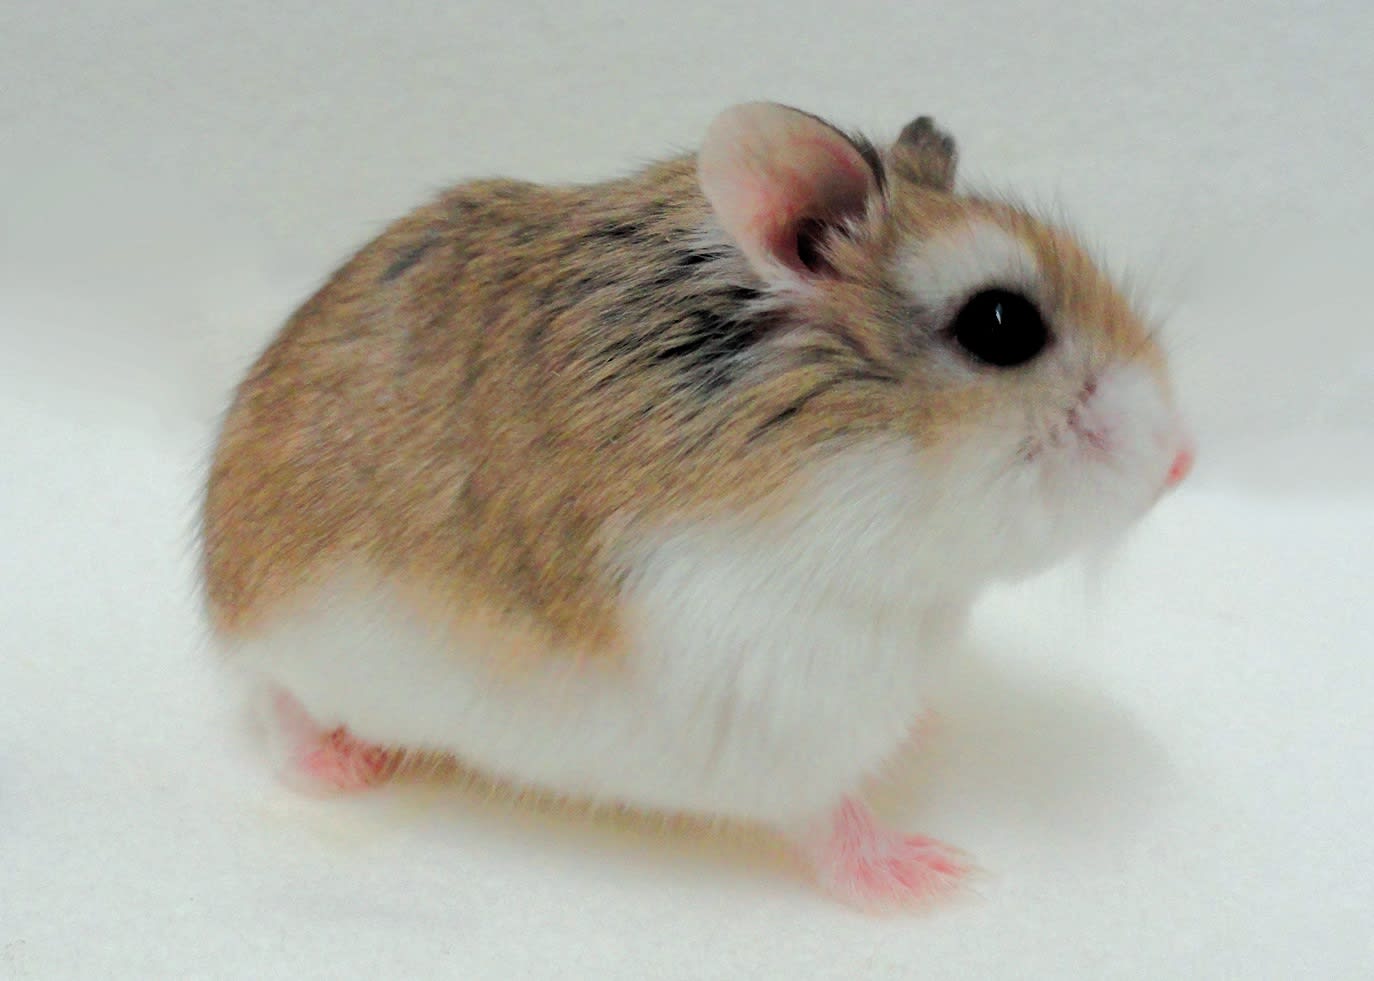 robo dwarf hamster care